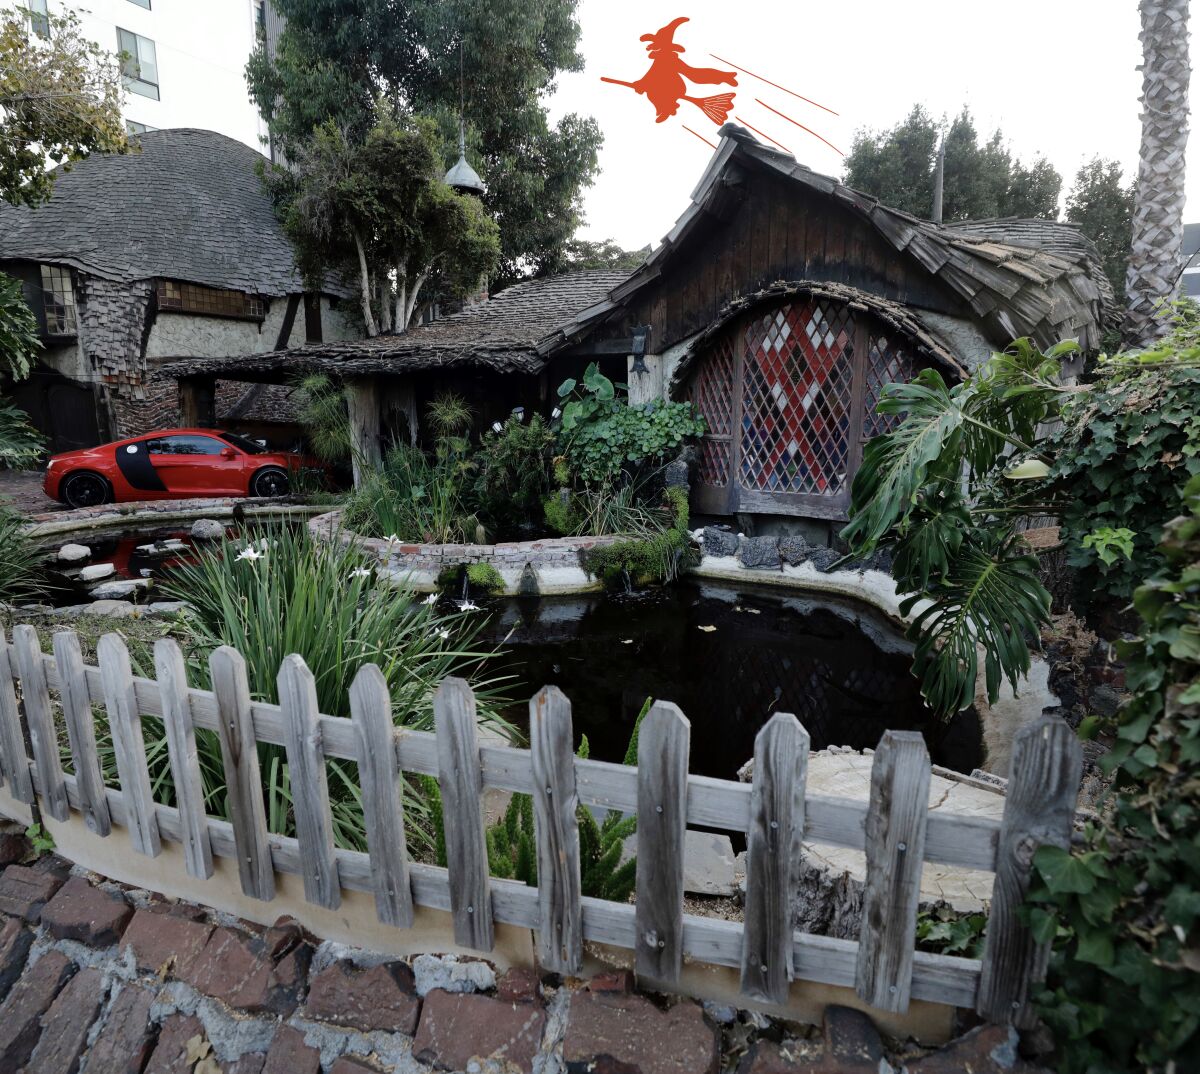 Culver City's "Hobbit Houses"